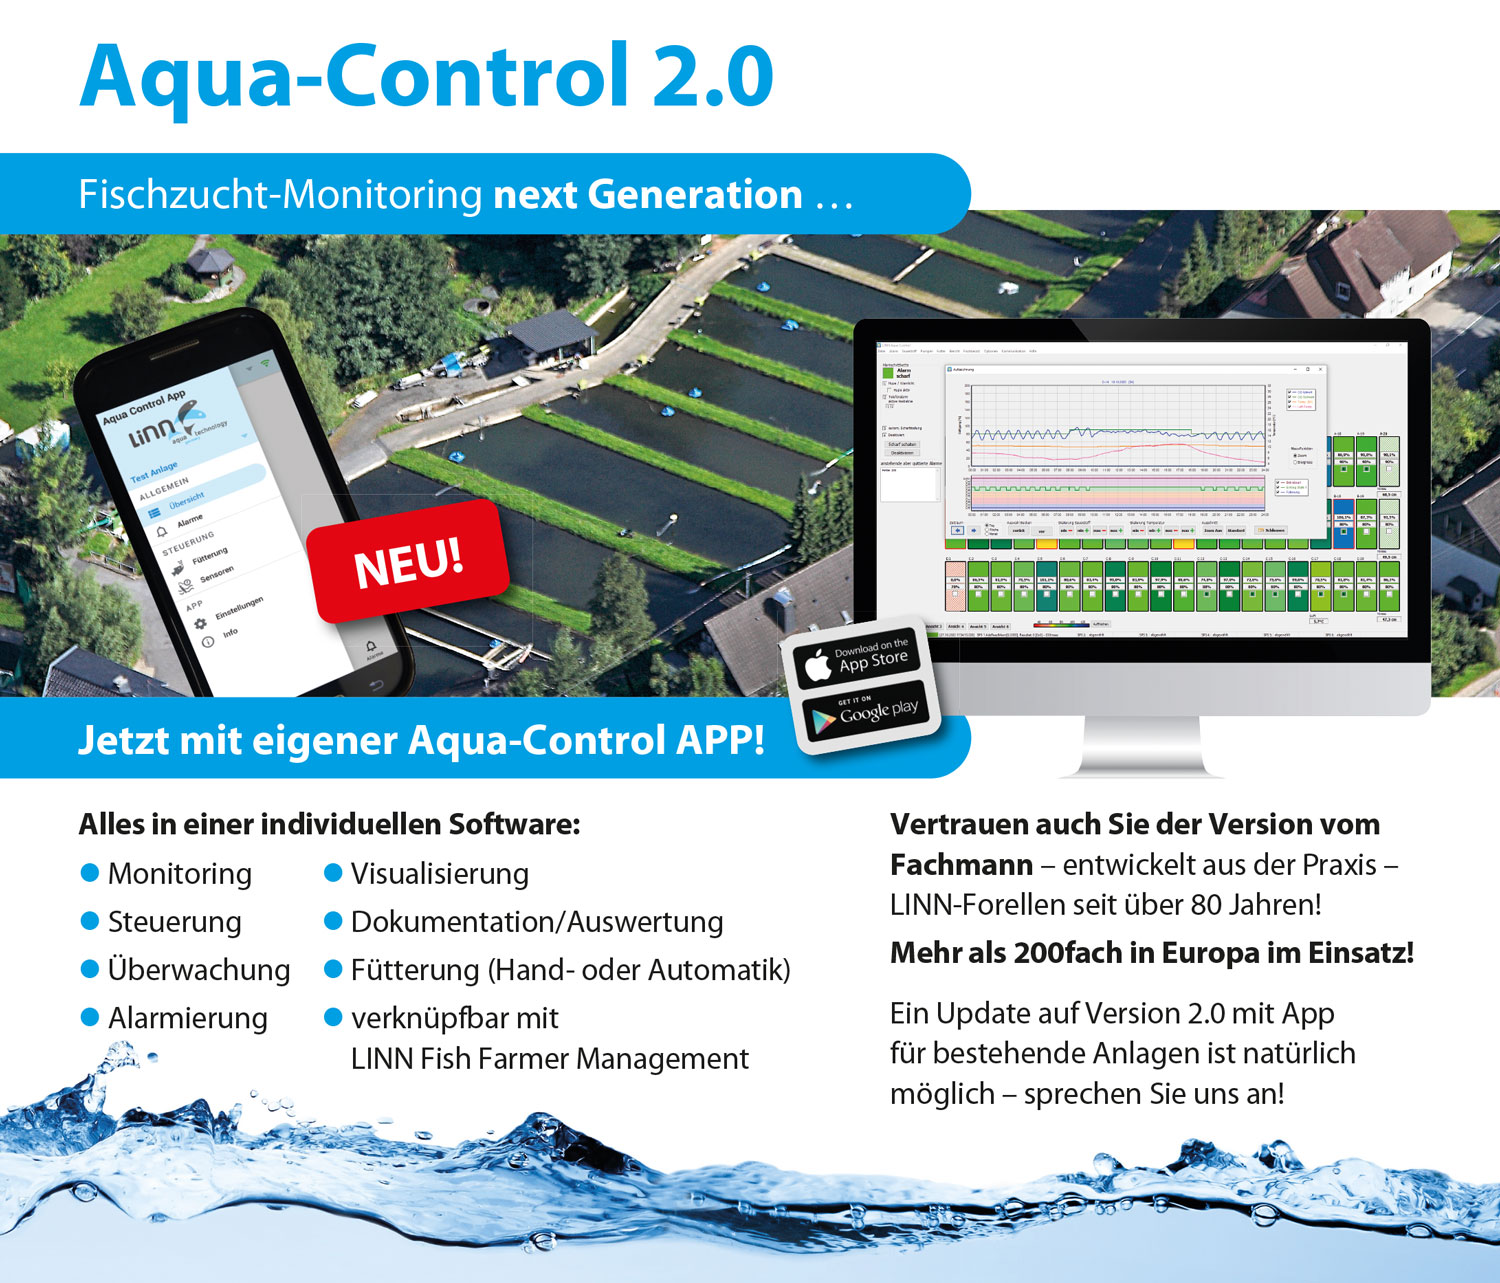 Aqua-Control 2.0 - Fischzucht-Monitoring next Generation